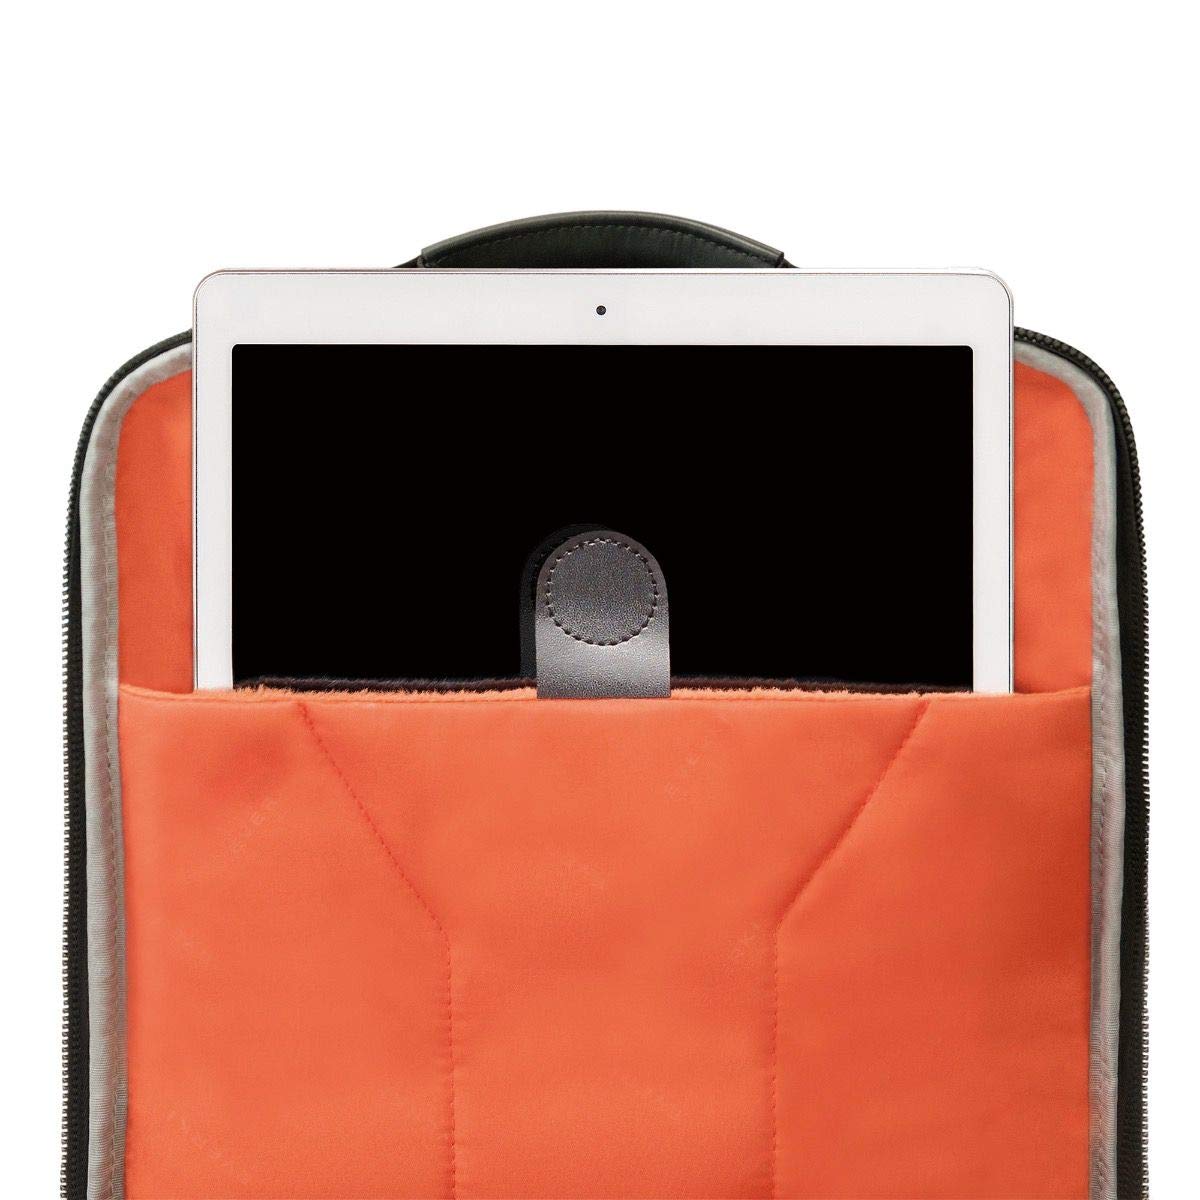 EVERKI Onyx Premium Business Executive 15.6-Inch Laptop Backpack, Ballistic Nylon and Leather, Travel Friendly (EKP132), Black